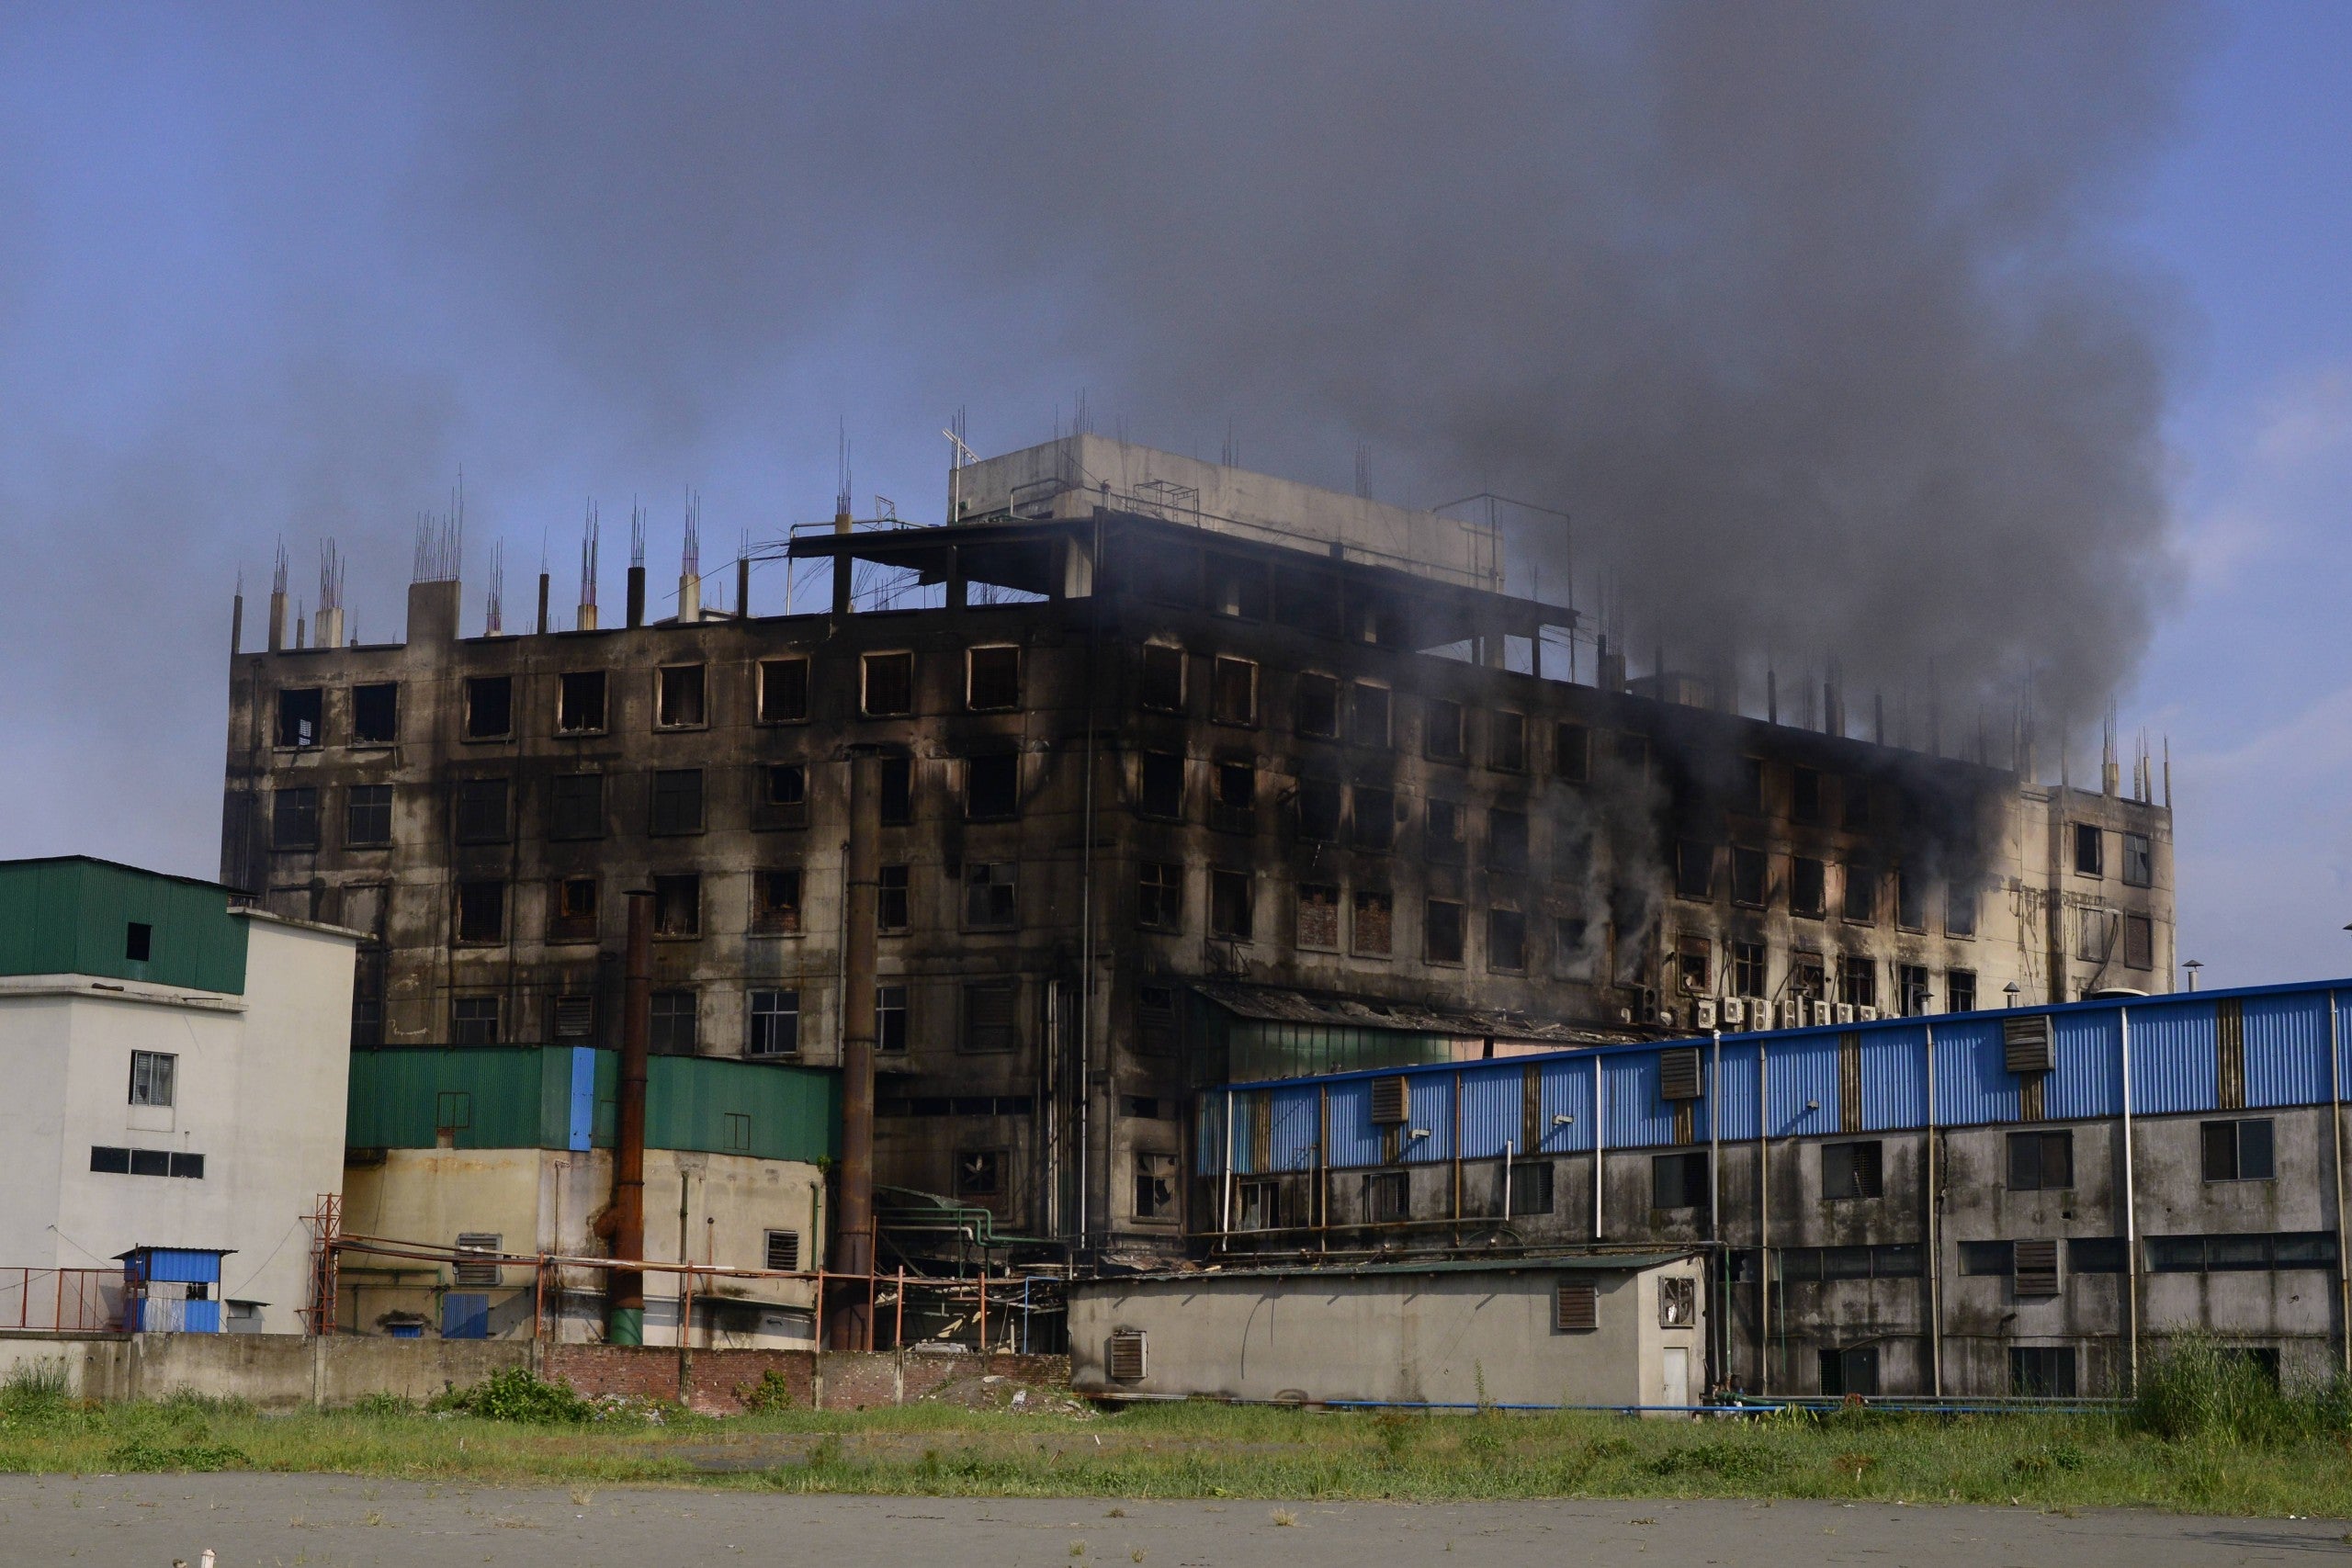 52 dead in Bangladesh factory fire as workers locked inside - WISH-TV ...